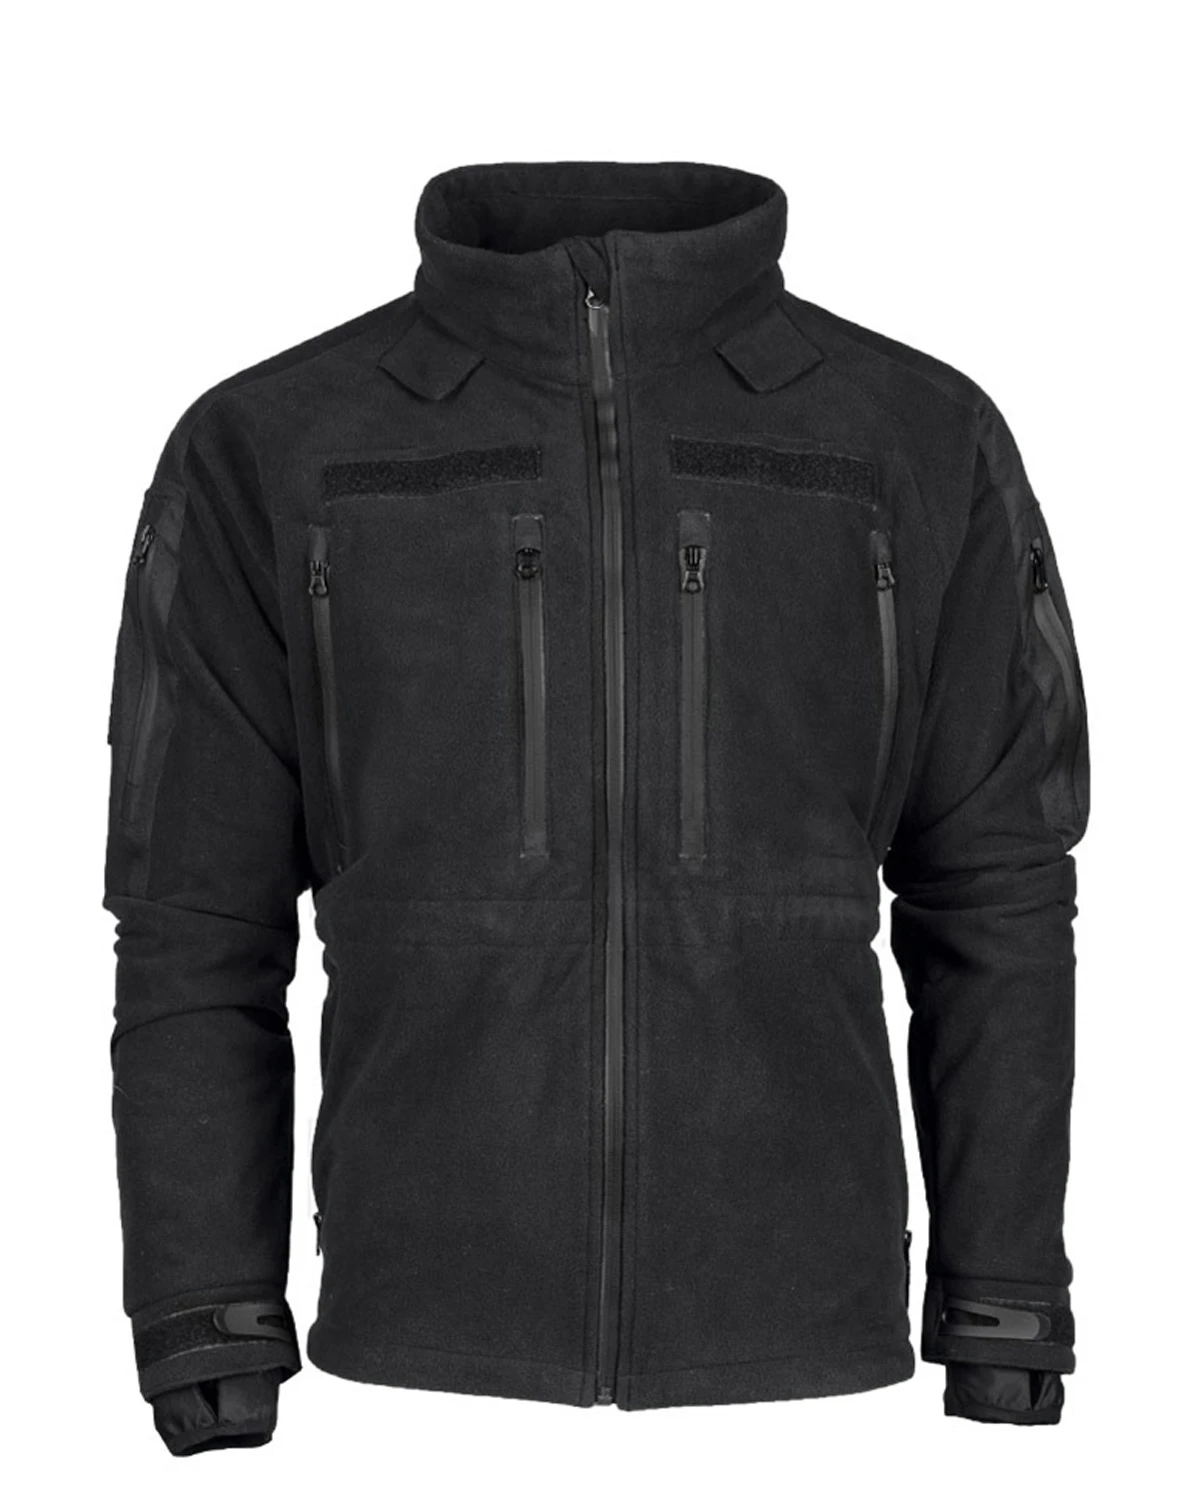 Buy Mil-Tec Plus Cold Weather Fleece Jacket | Money Back Guarantee ...